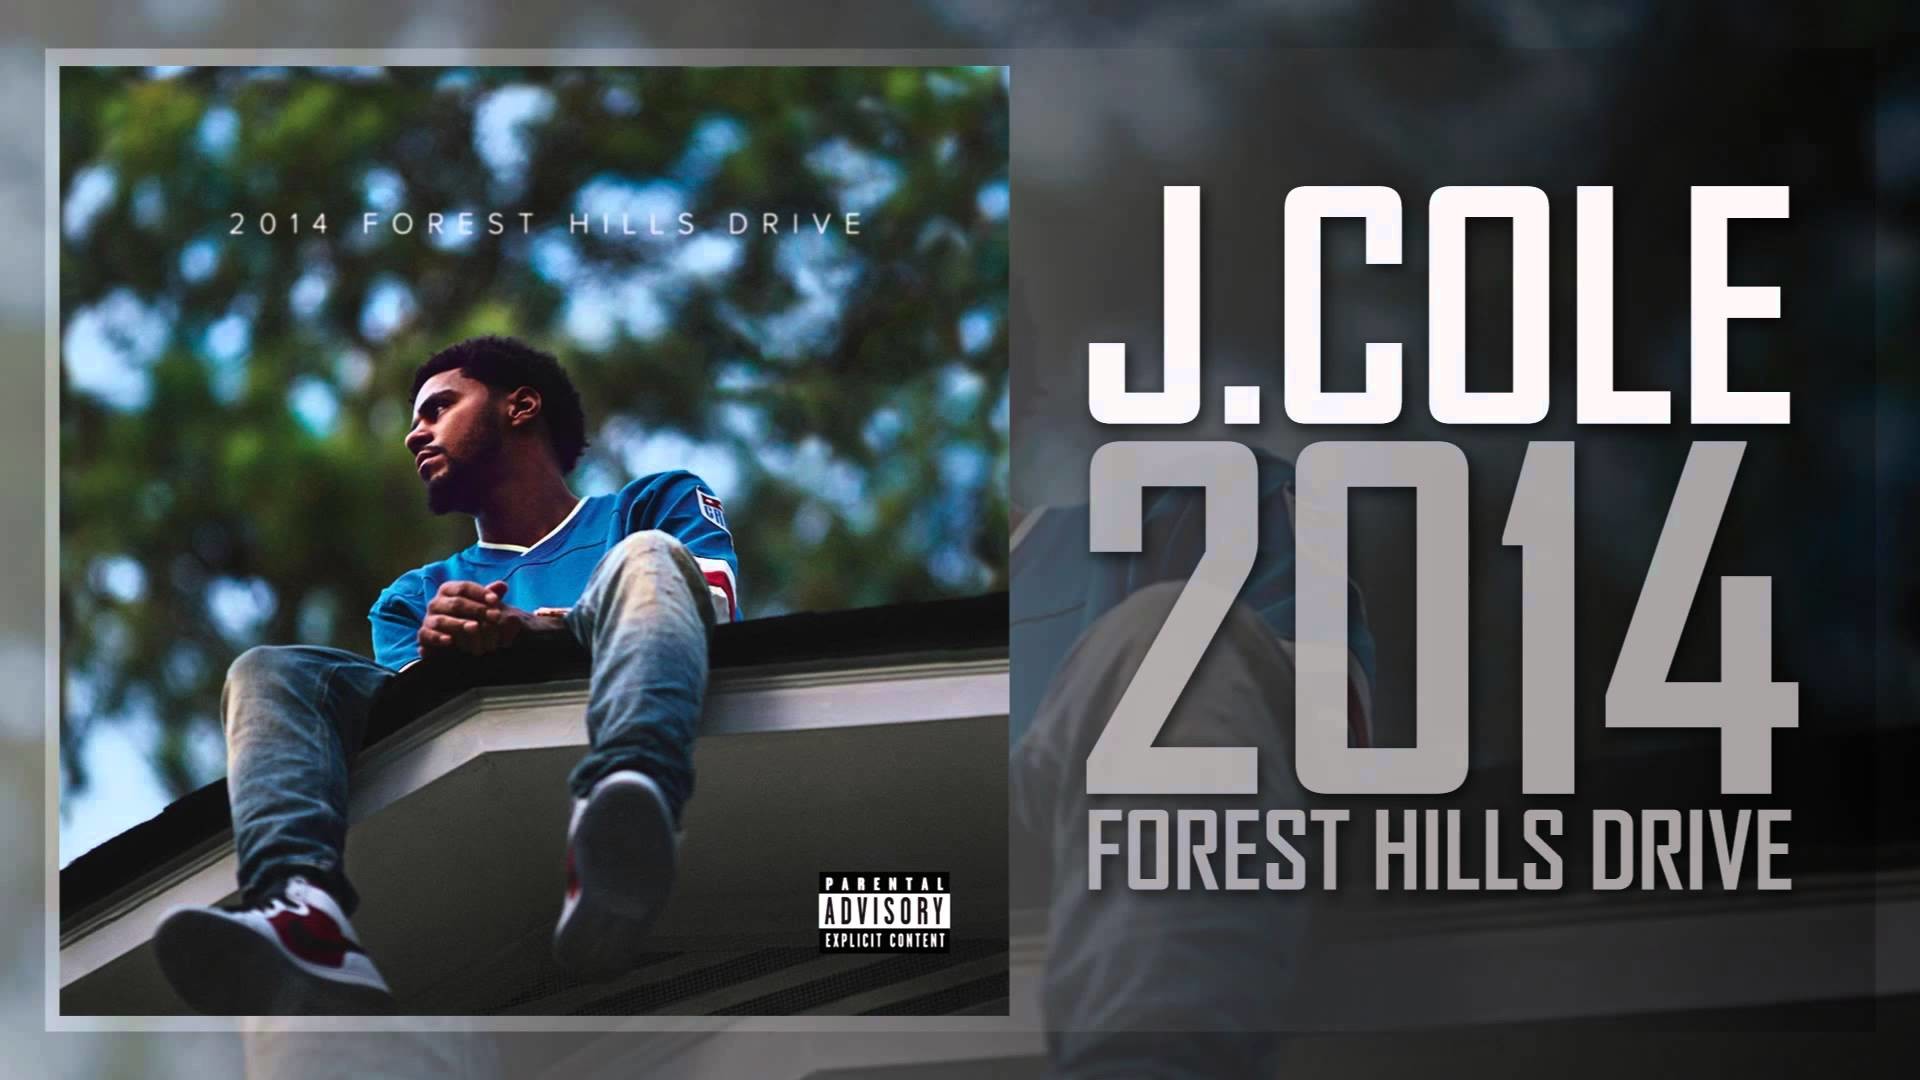 j cole forest hills drive album download sharebeast